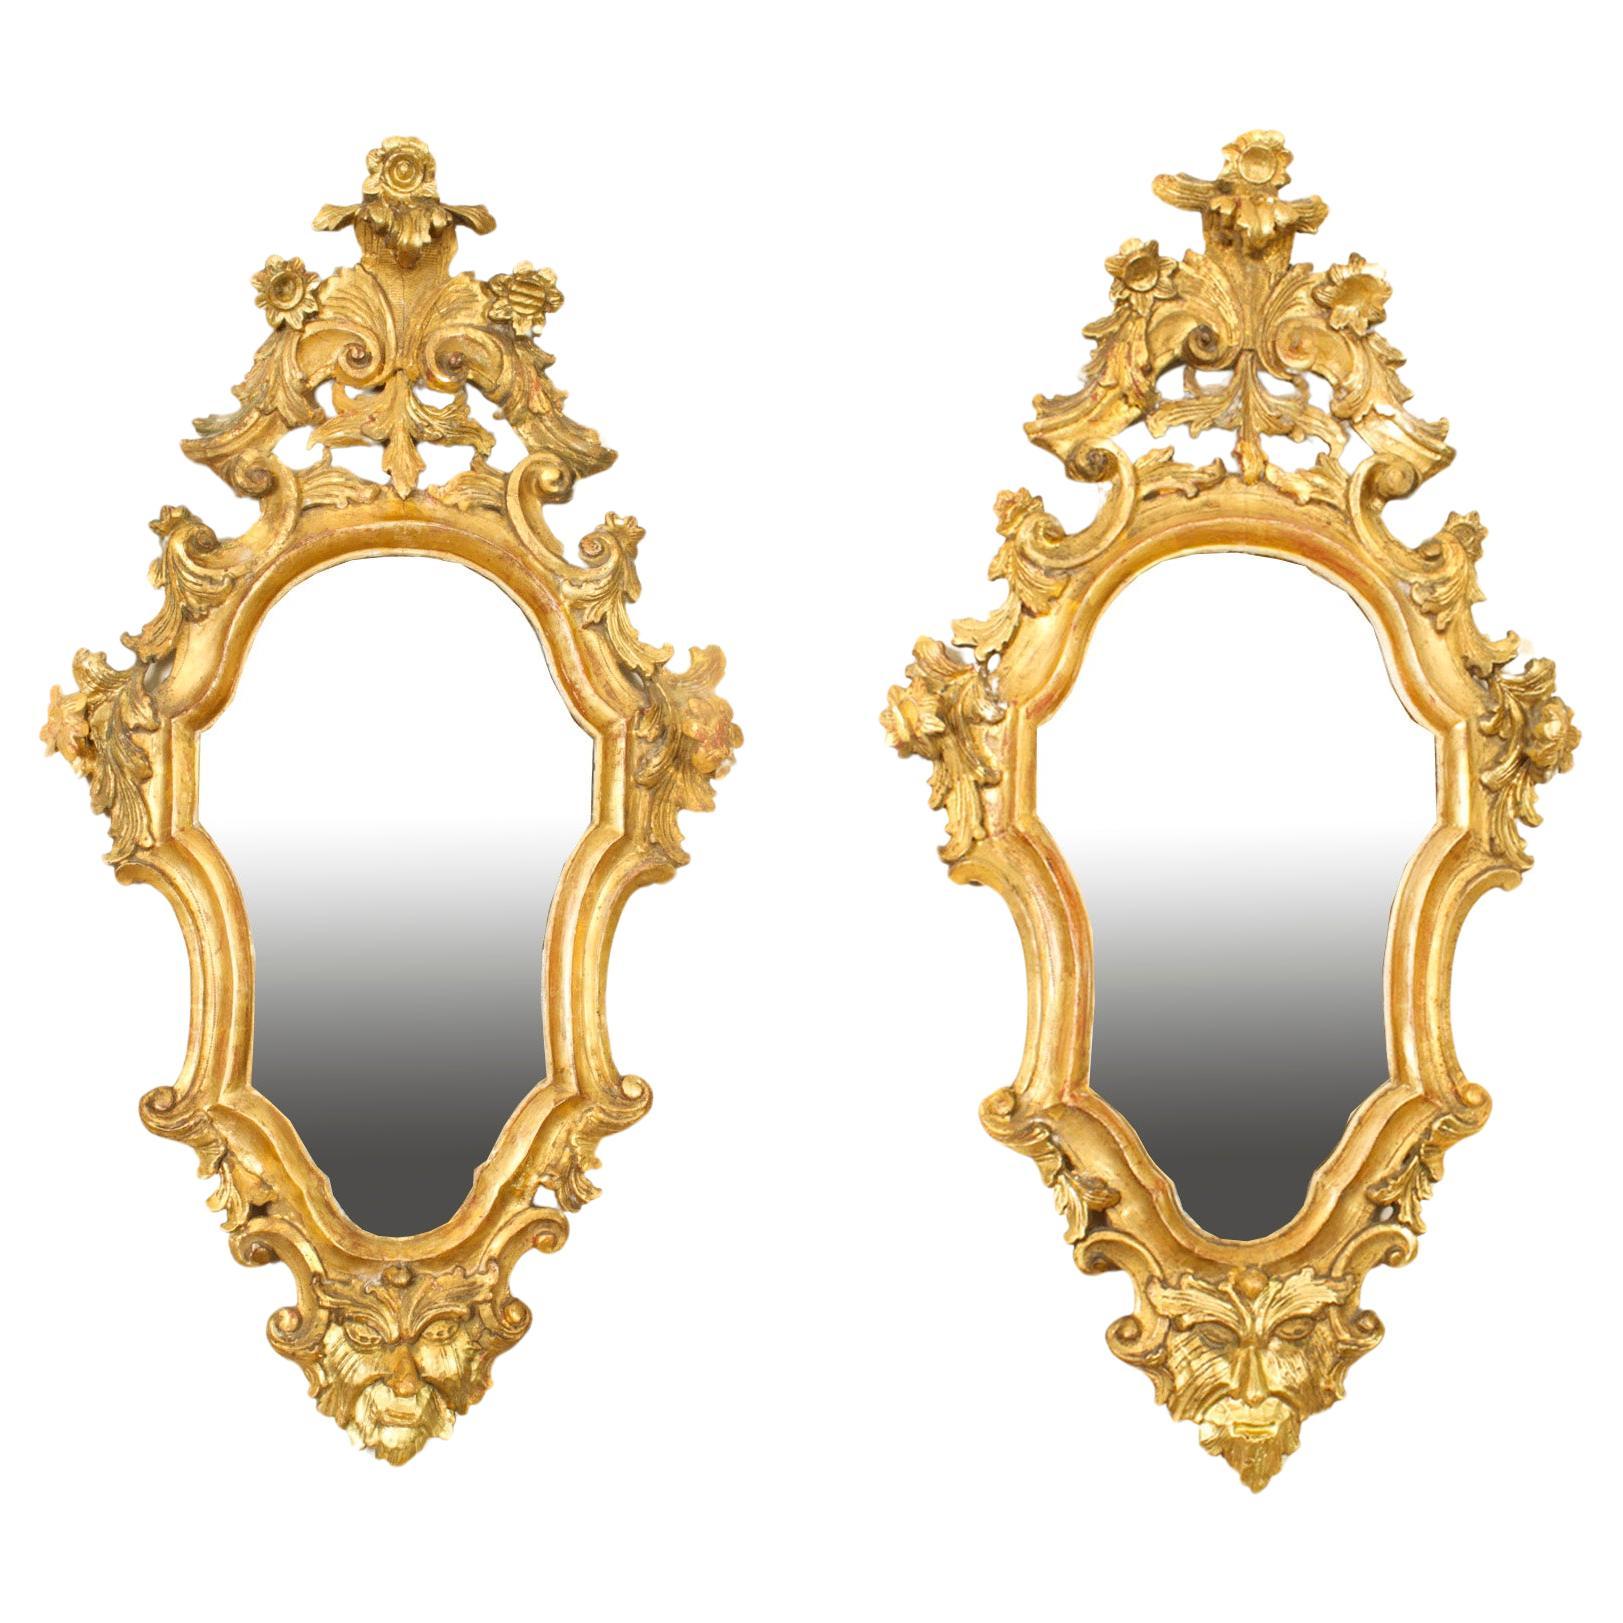 Antique Pair Florentine Rococo Giltwood Mirrors 19th Century 77x42cm For Sale